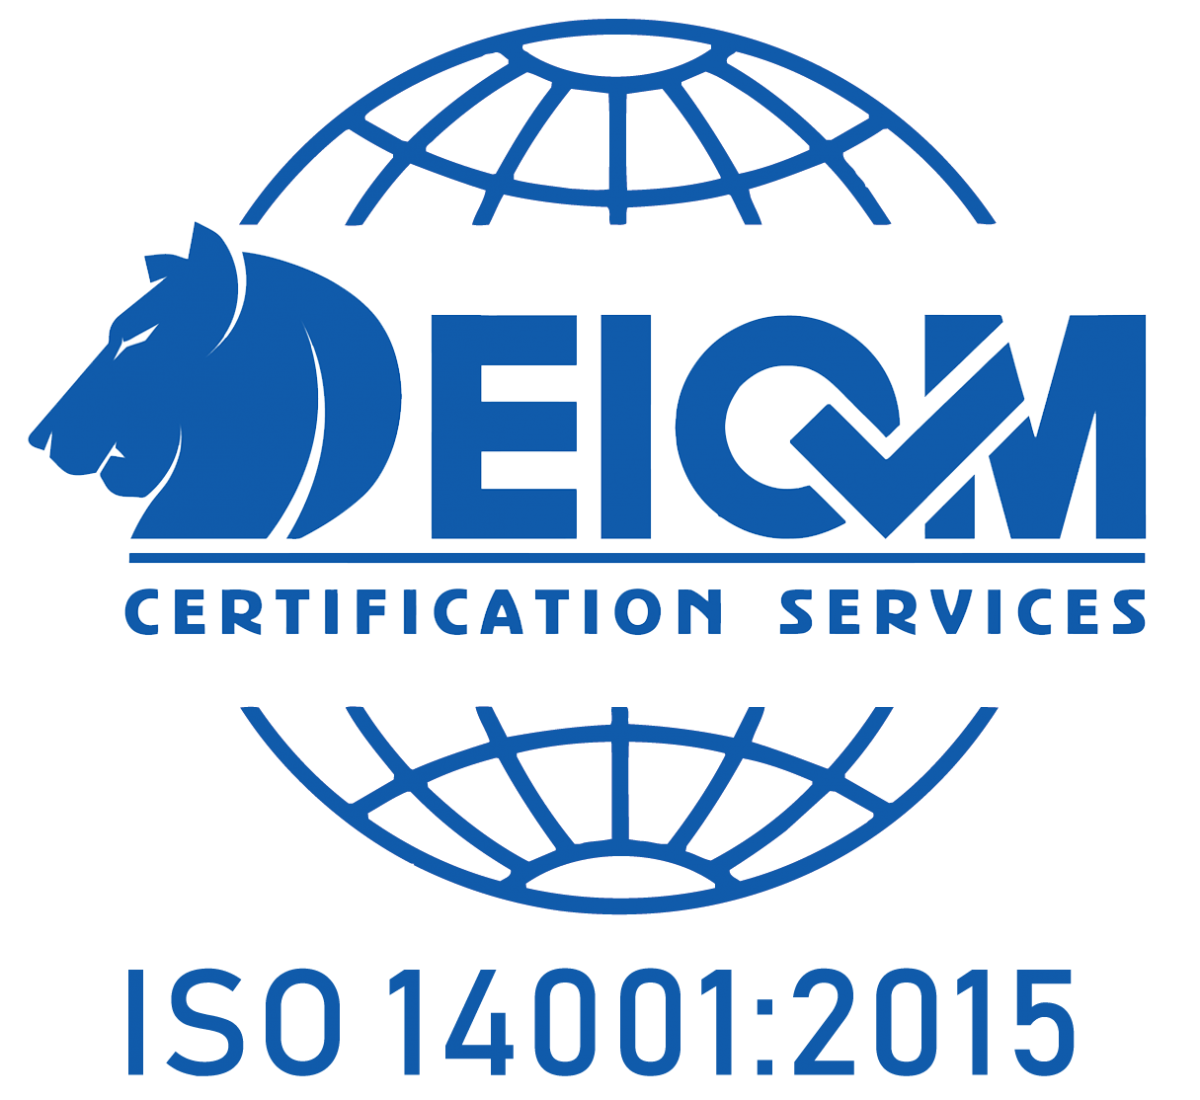 EIQM ISO LOGO NEW iso 14001-2015